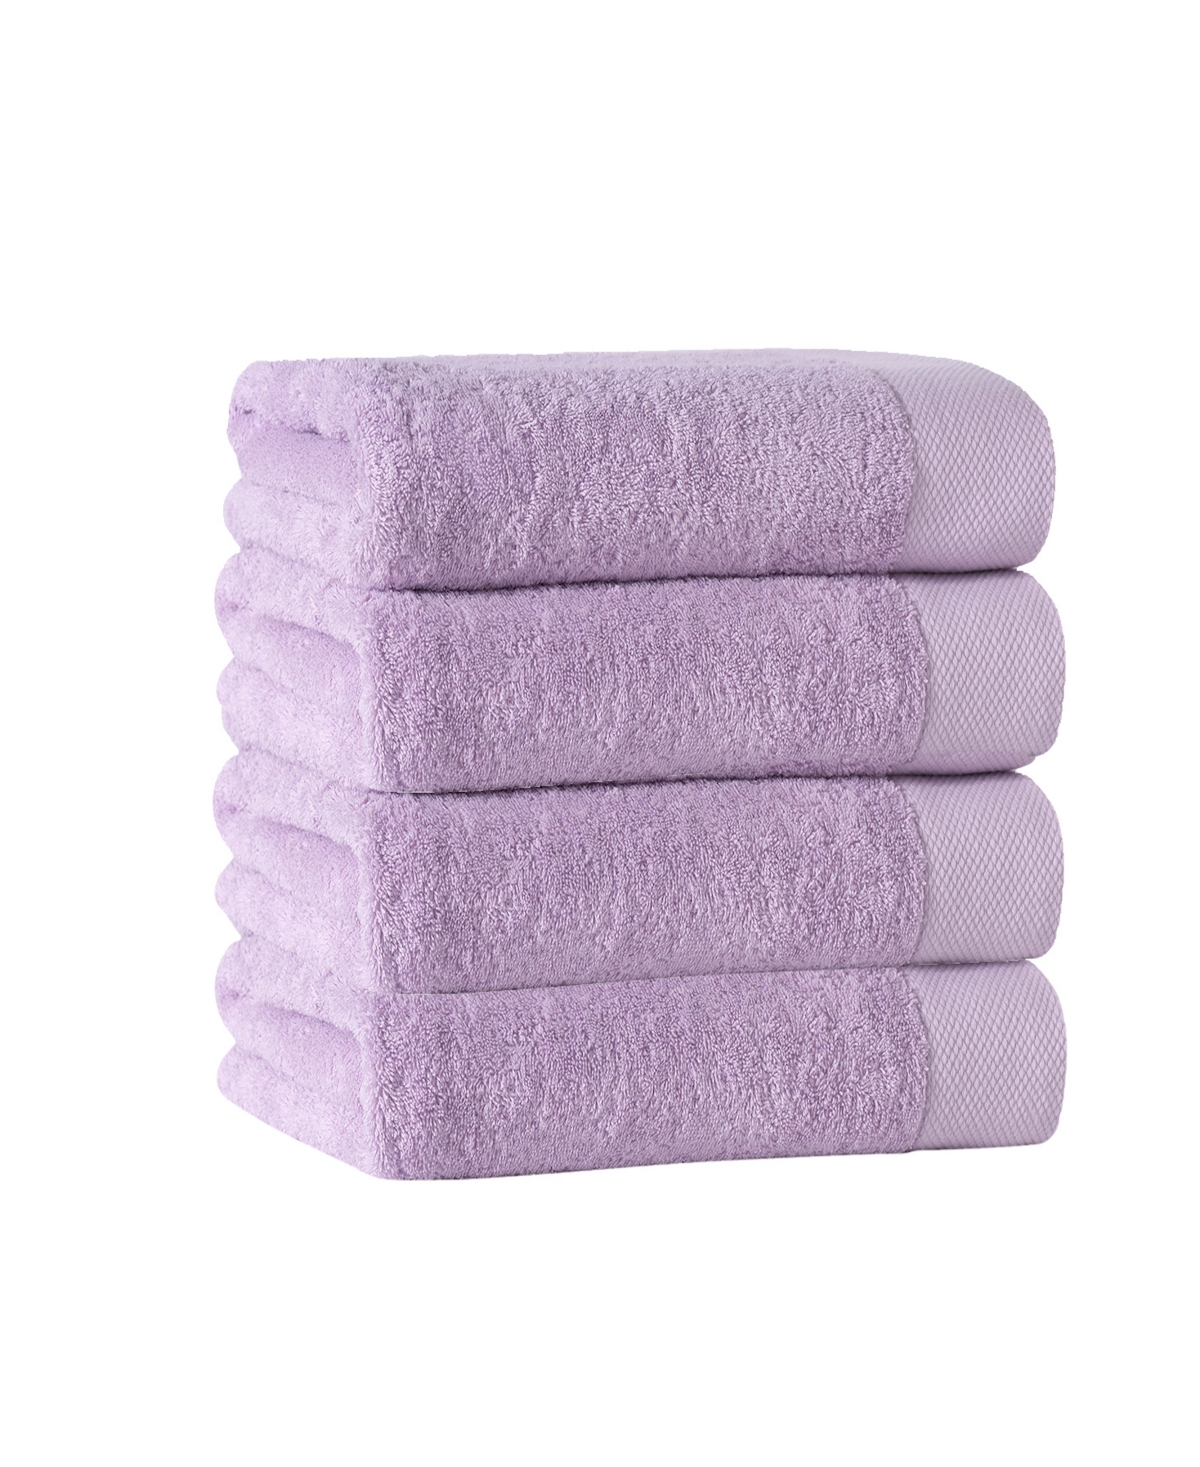 Enchante Home Signature 8-pc. Wash Towels Turkish Cotton Towel Set In Light,past